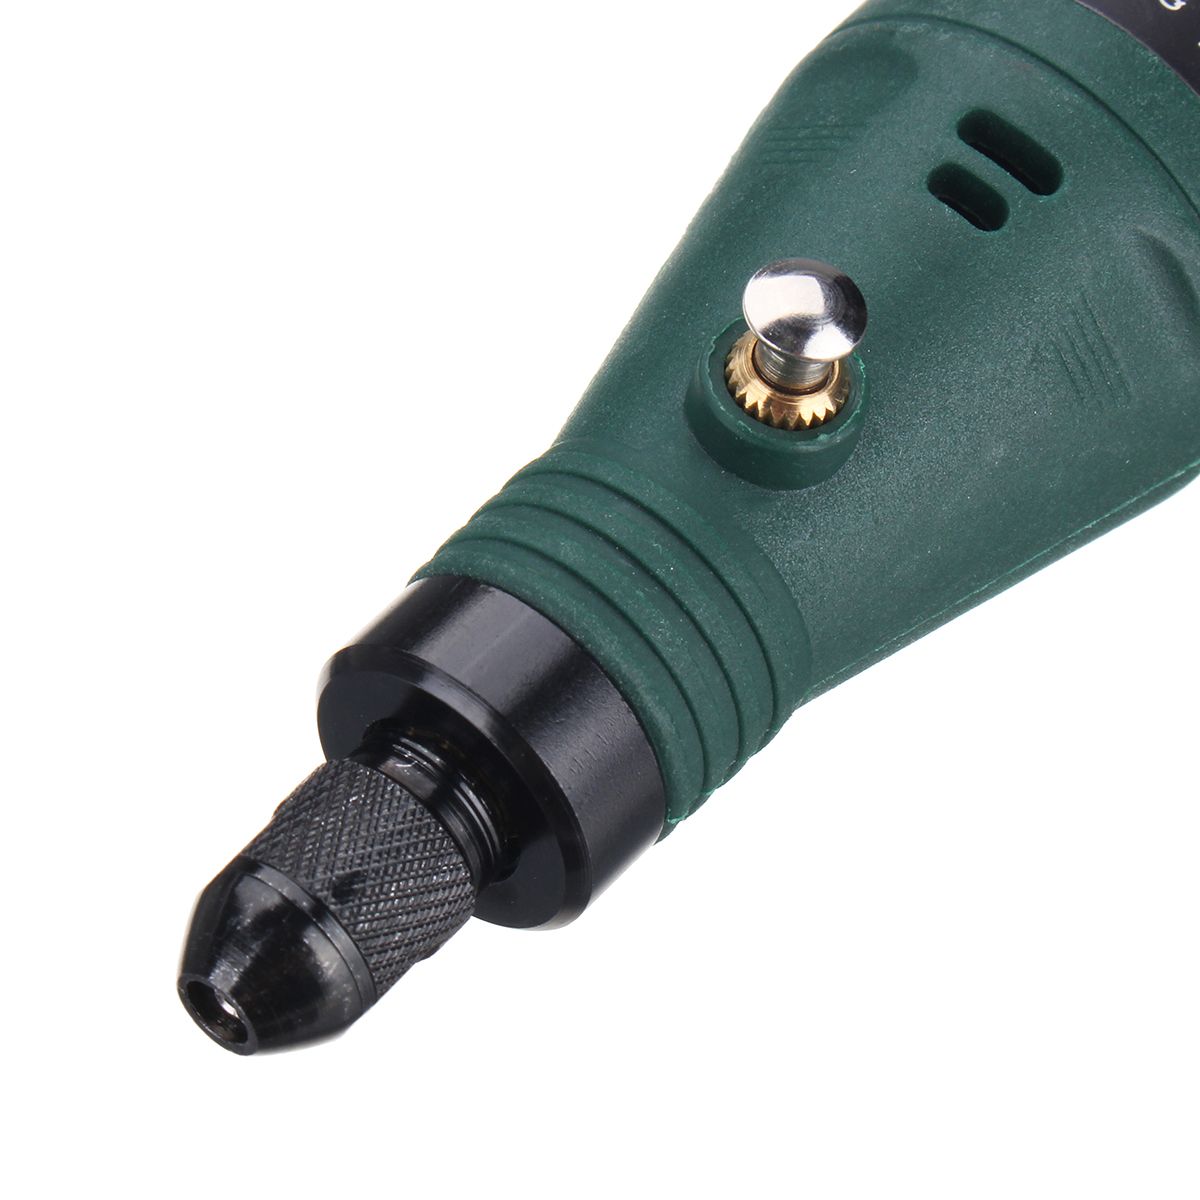 12V-45W-Electric-Polisher-Mini-Drill-Grinder-Machine-Polishing-Drilling-Engraving-Power-Tools-1321750